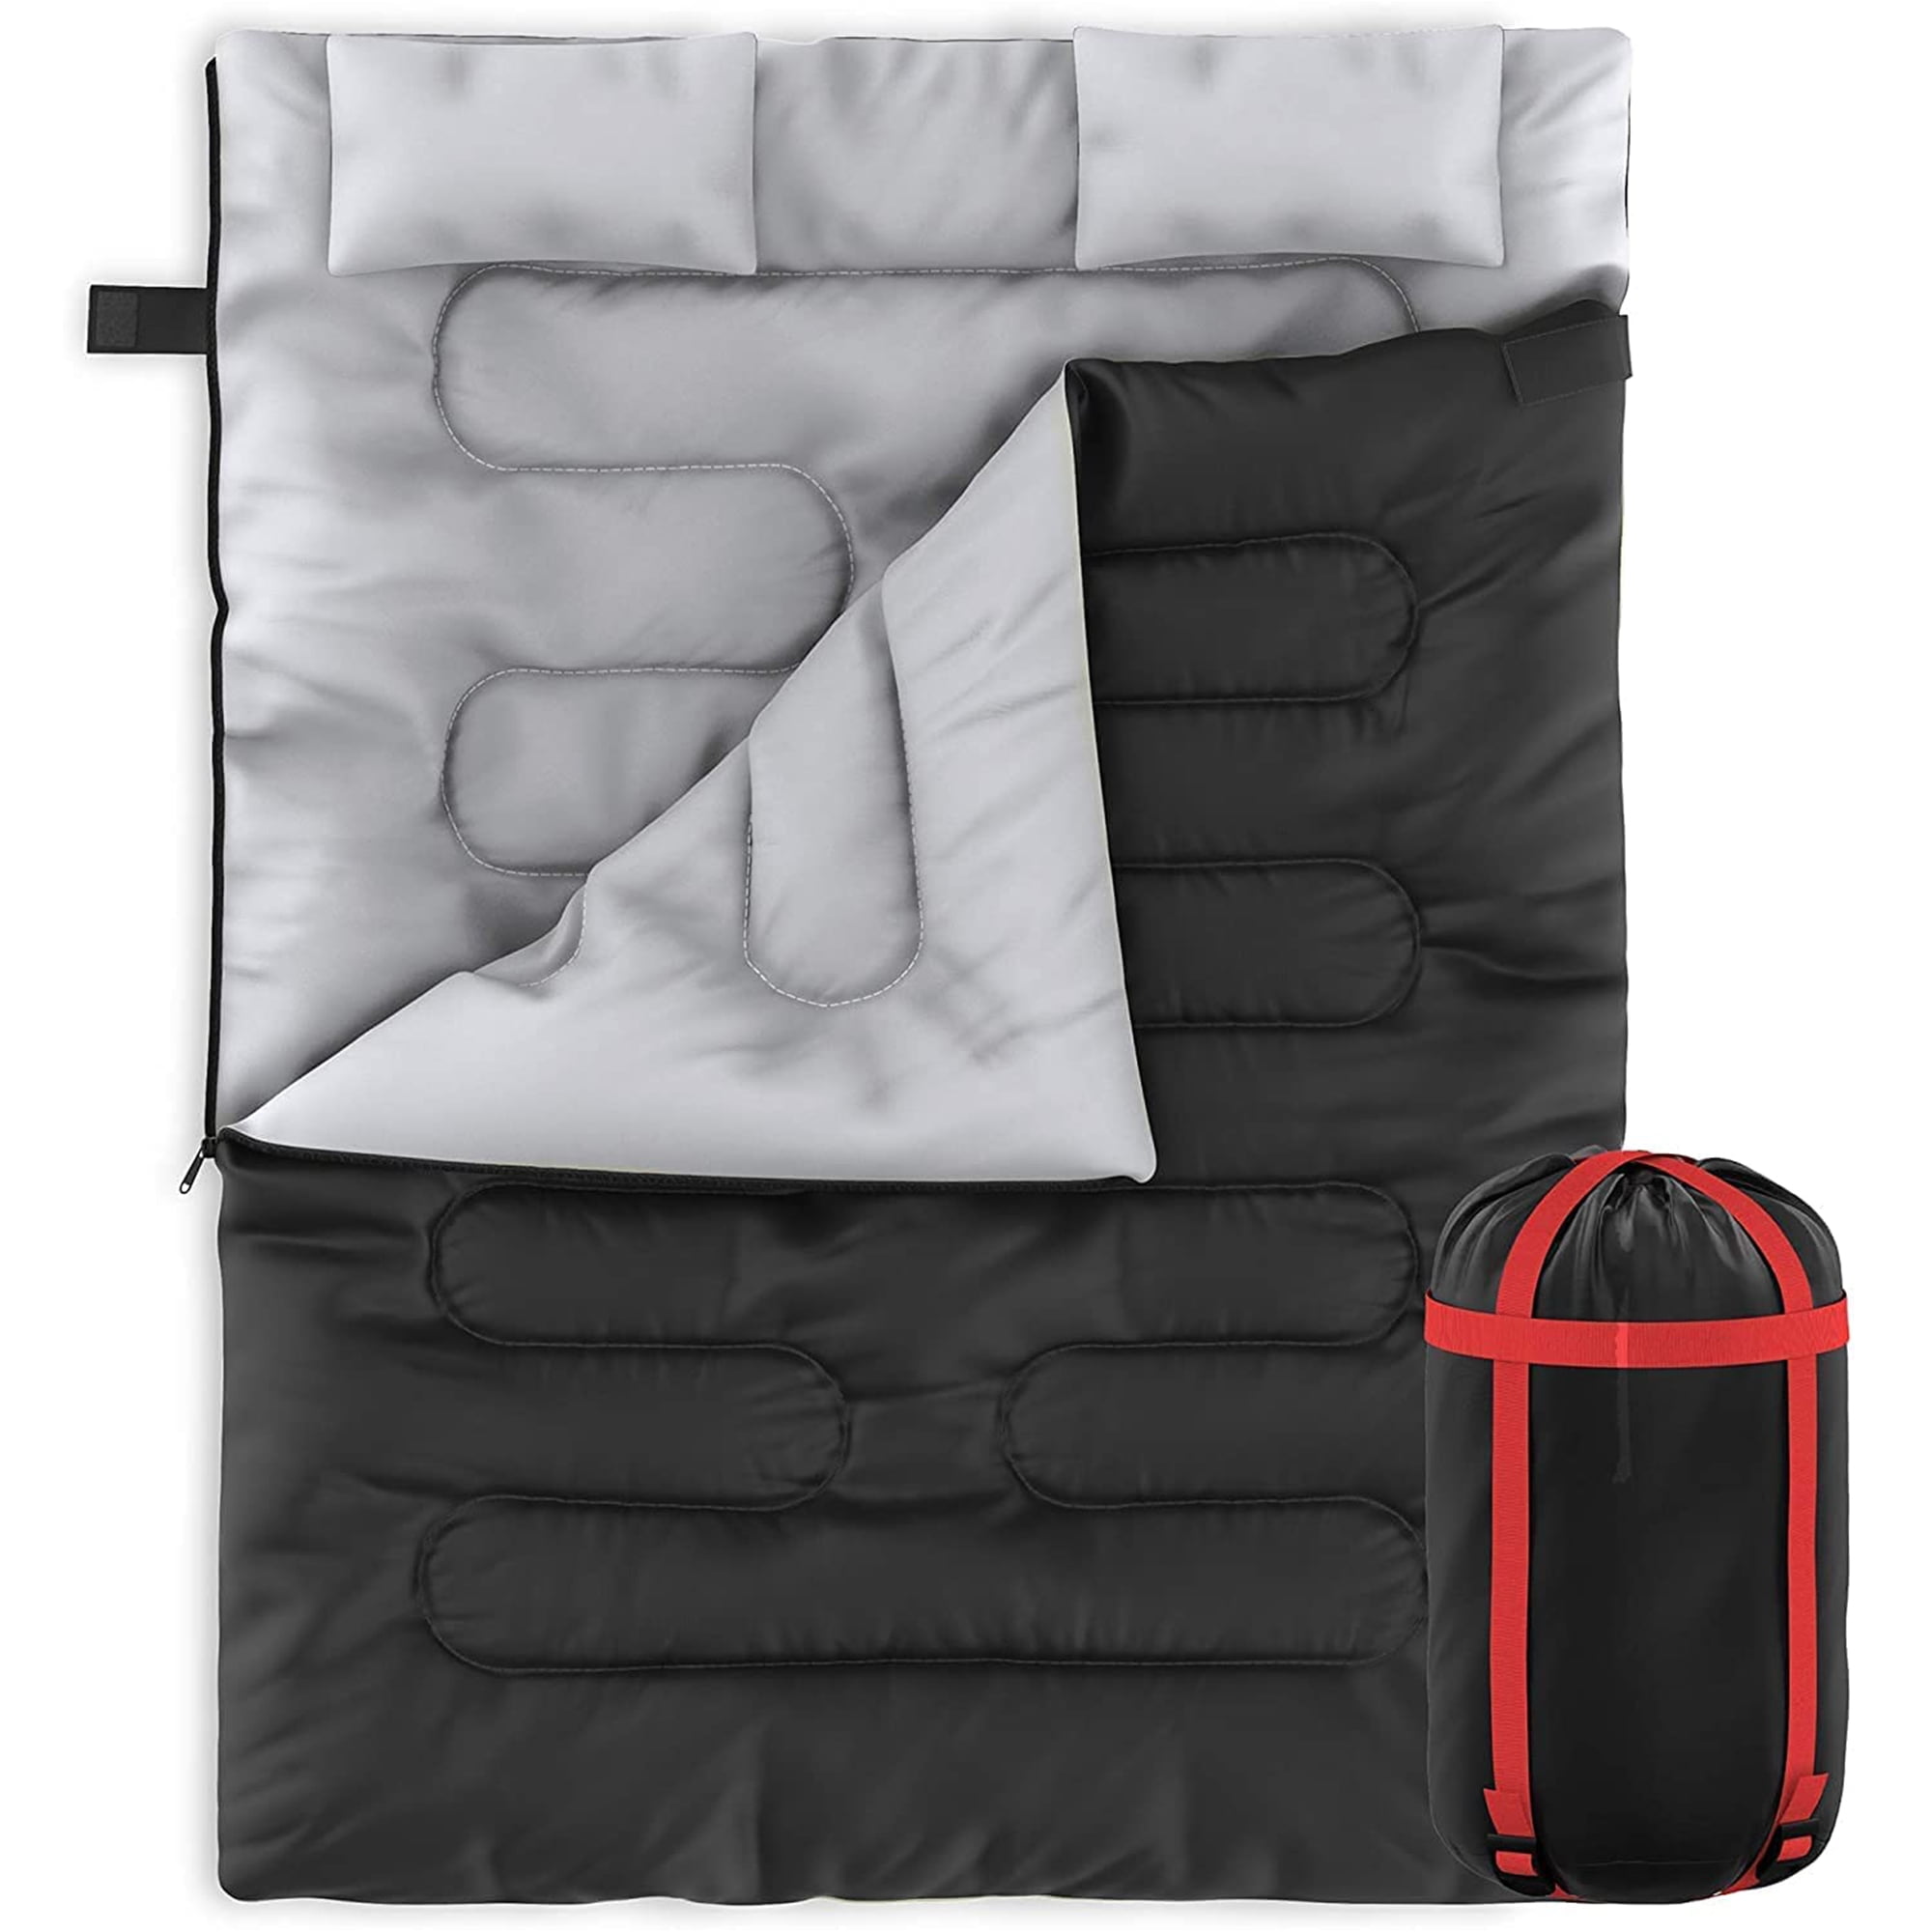 Bag Double Warm Sleeping Bag Outdoor Camping Waterproof 4 Season Convertible 